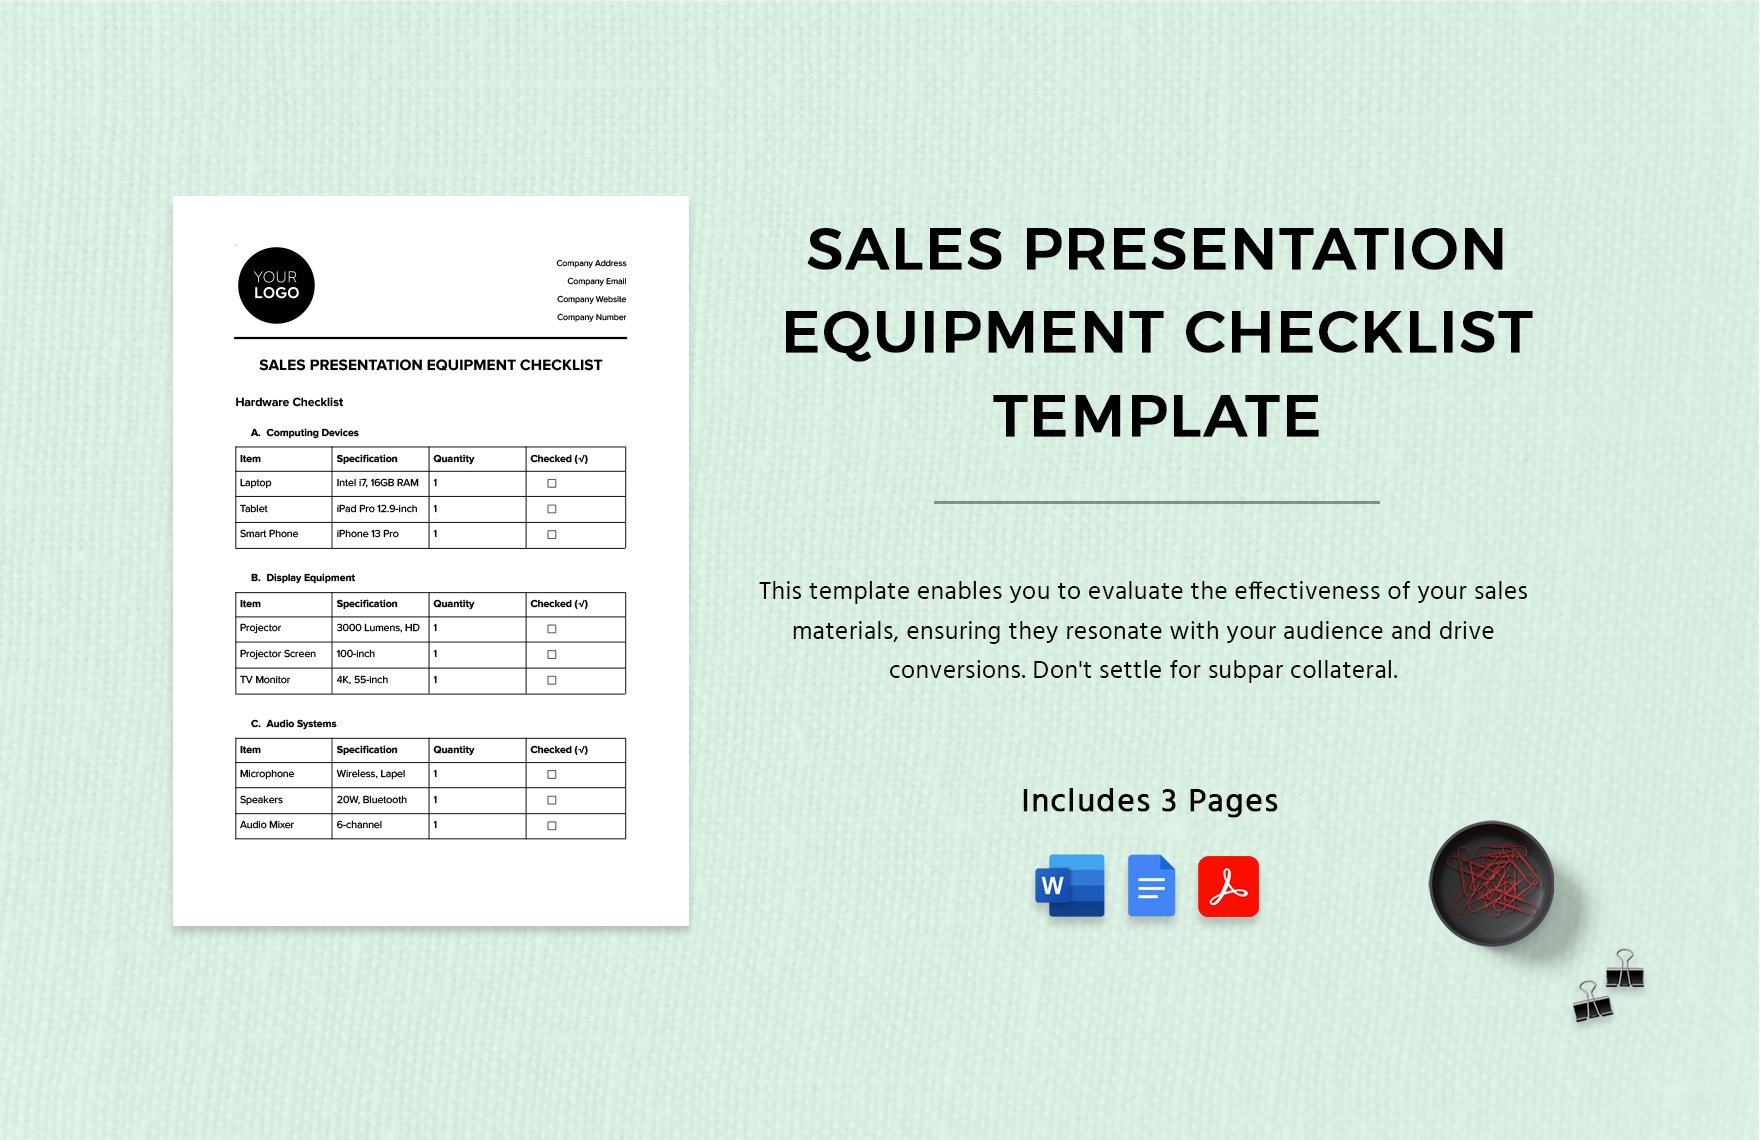 Sales Presentation Equipment Checklist Template in Word, Google Docs, PDF